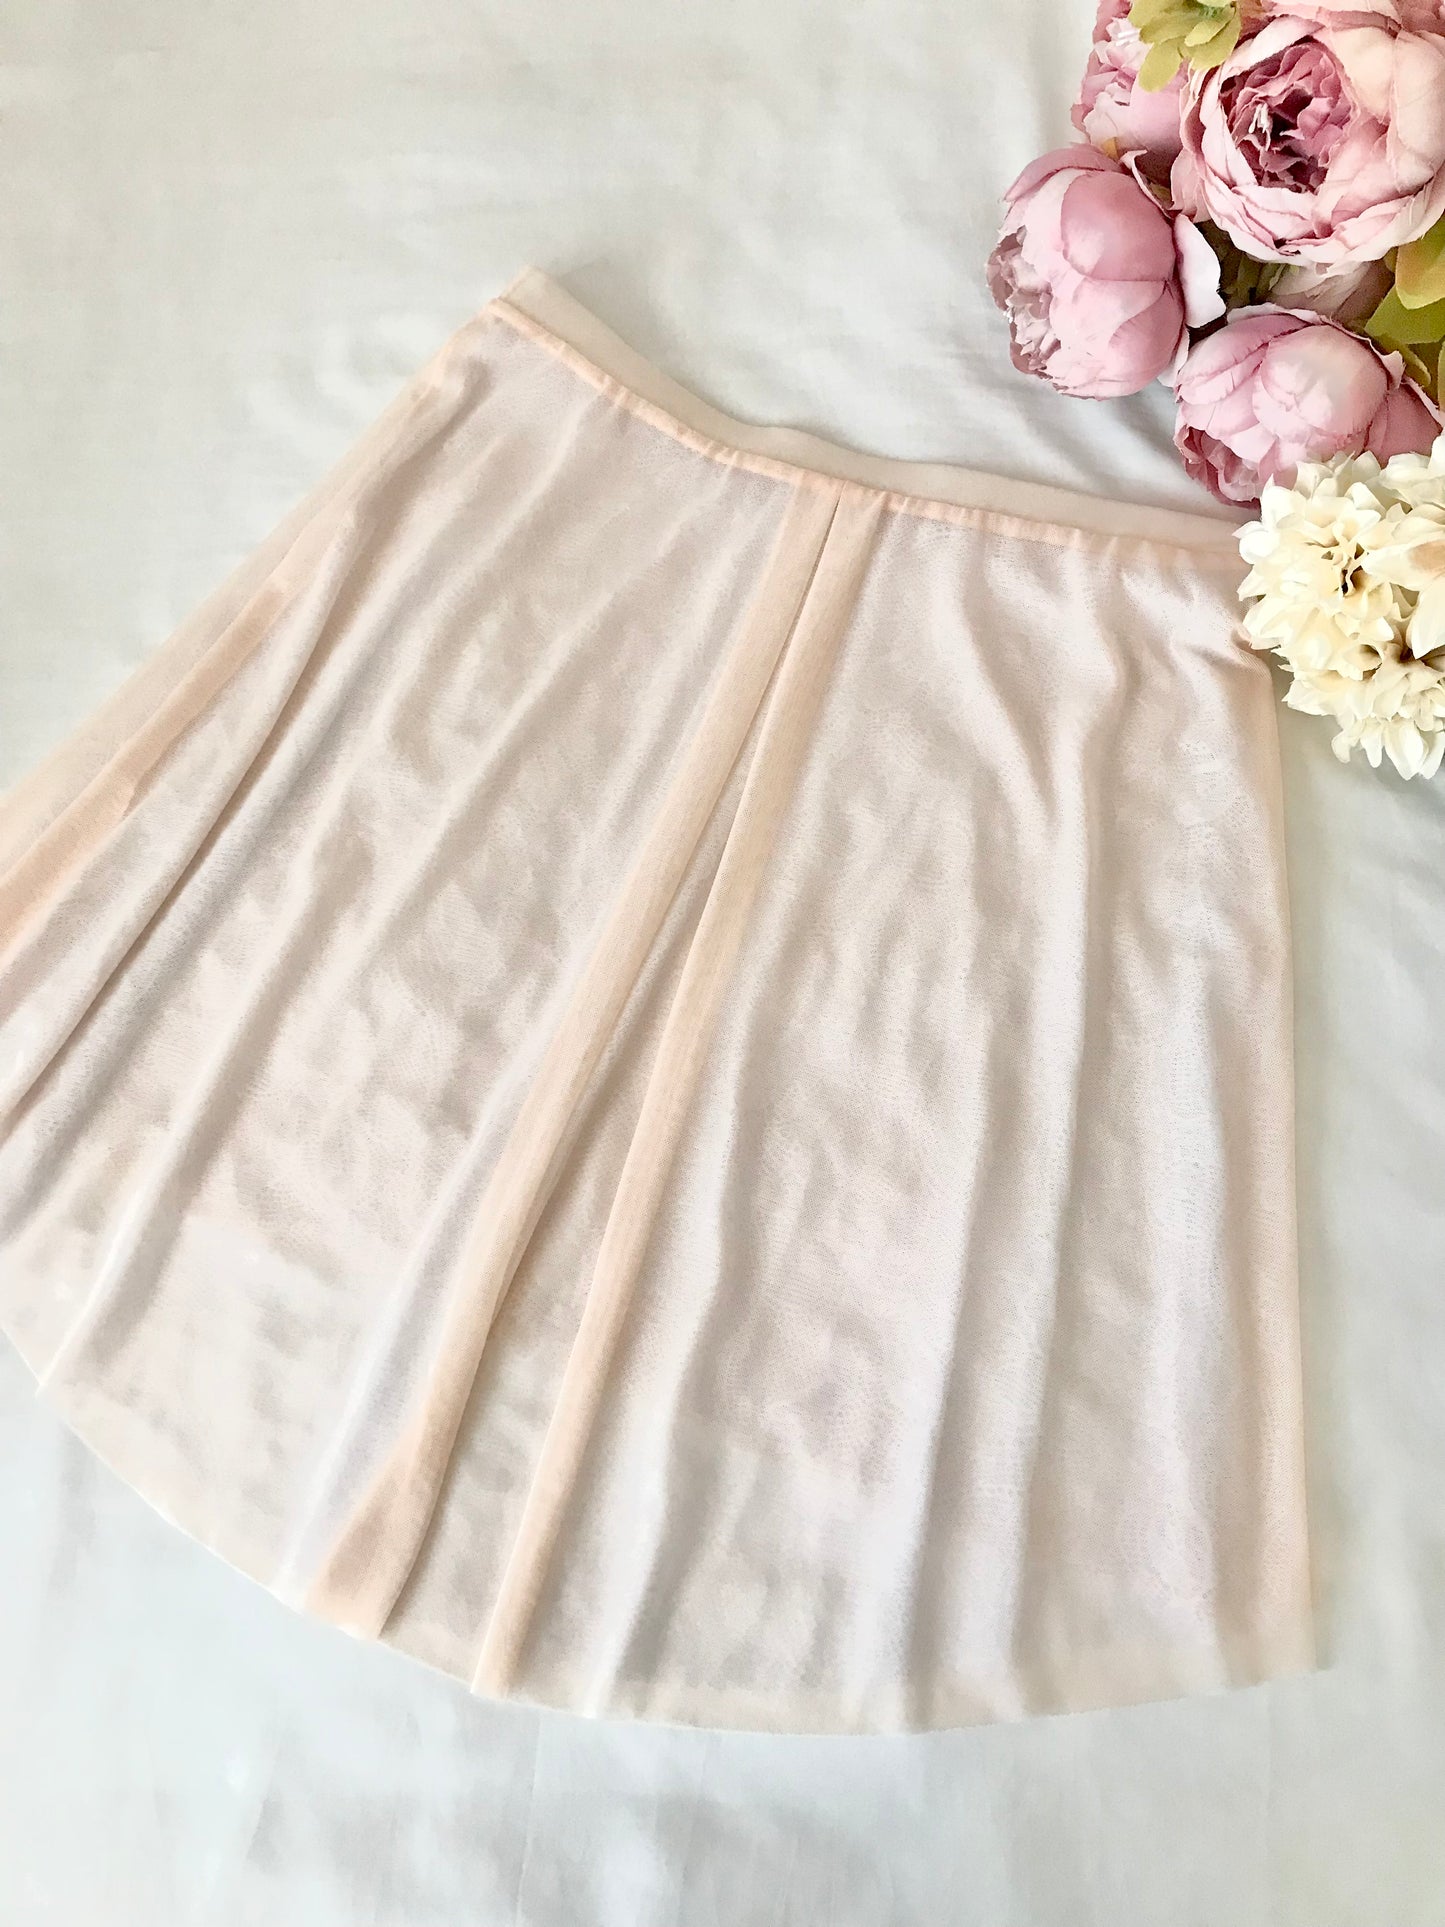 Reversible Lace Skirt (Salmon Beige)